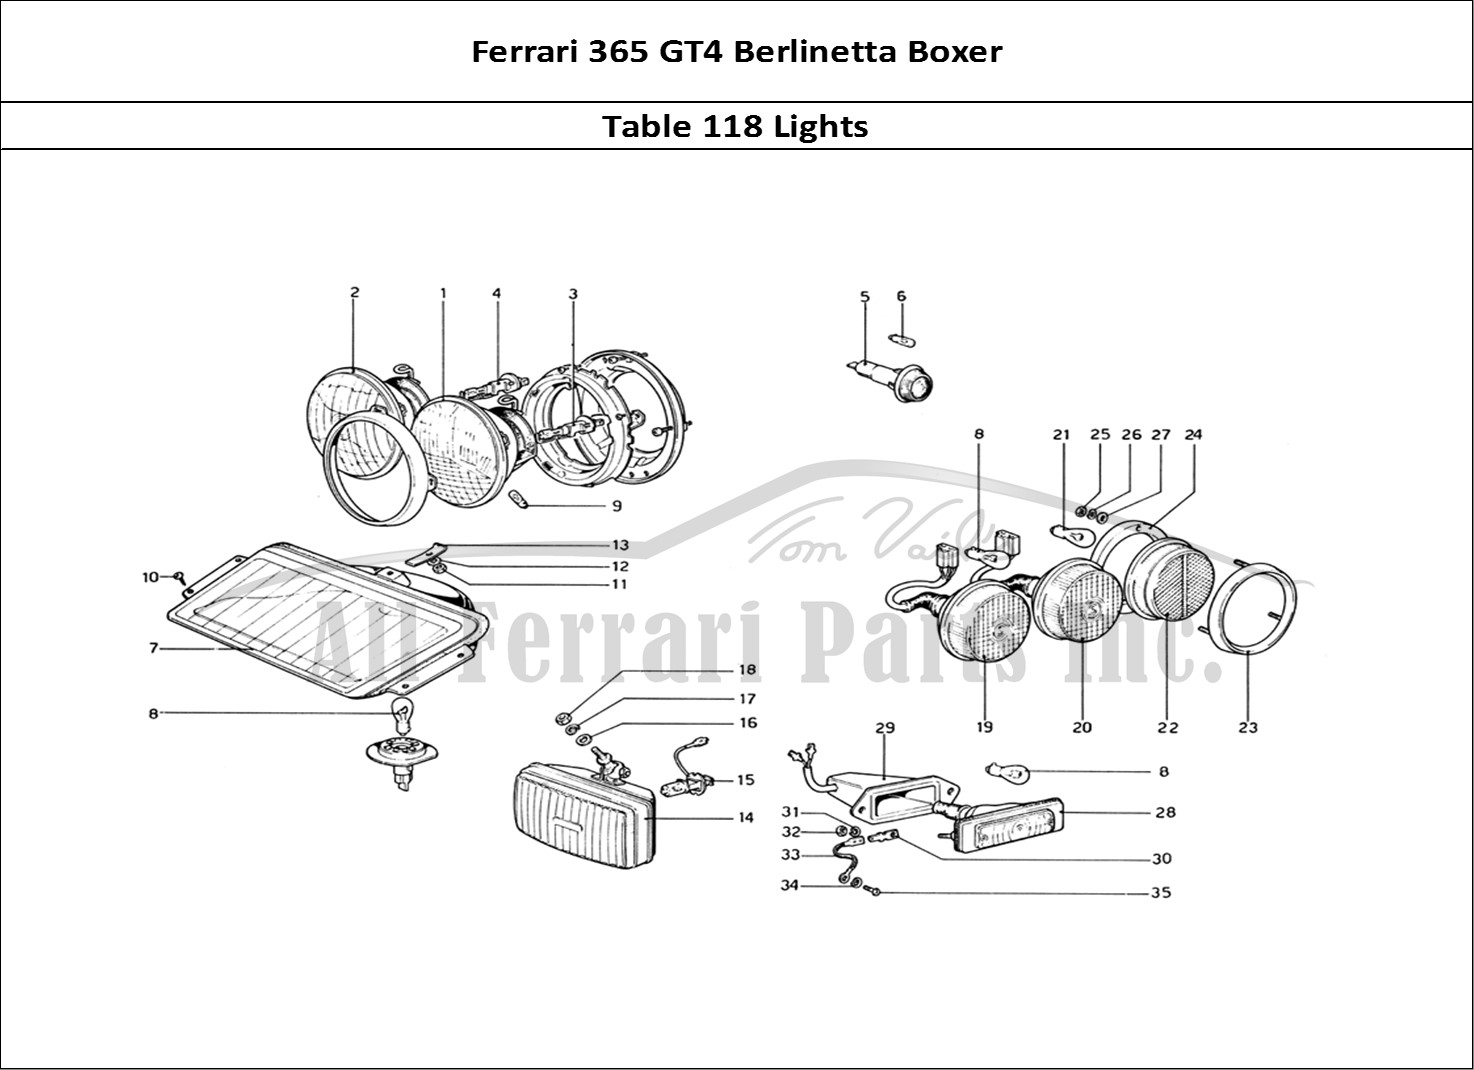 Ferrari Parts Ferrari 365 GT4 Berlinetta Boxer Page 118 Lights